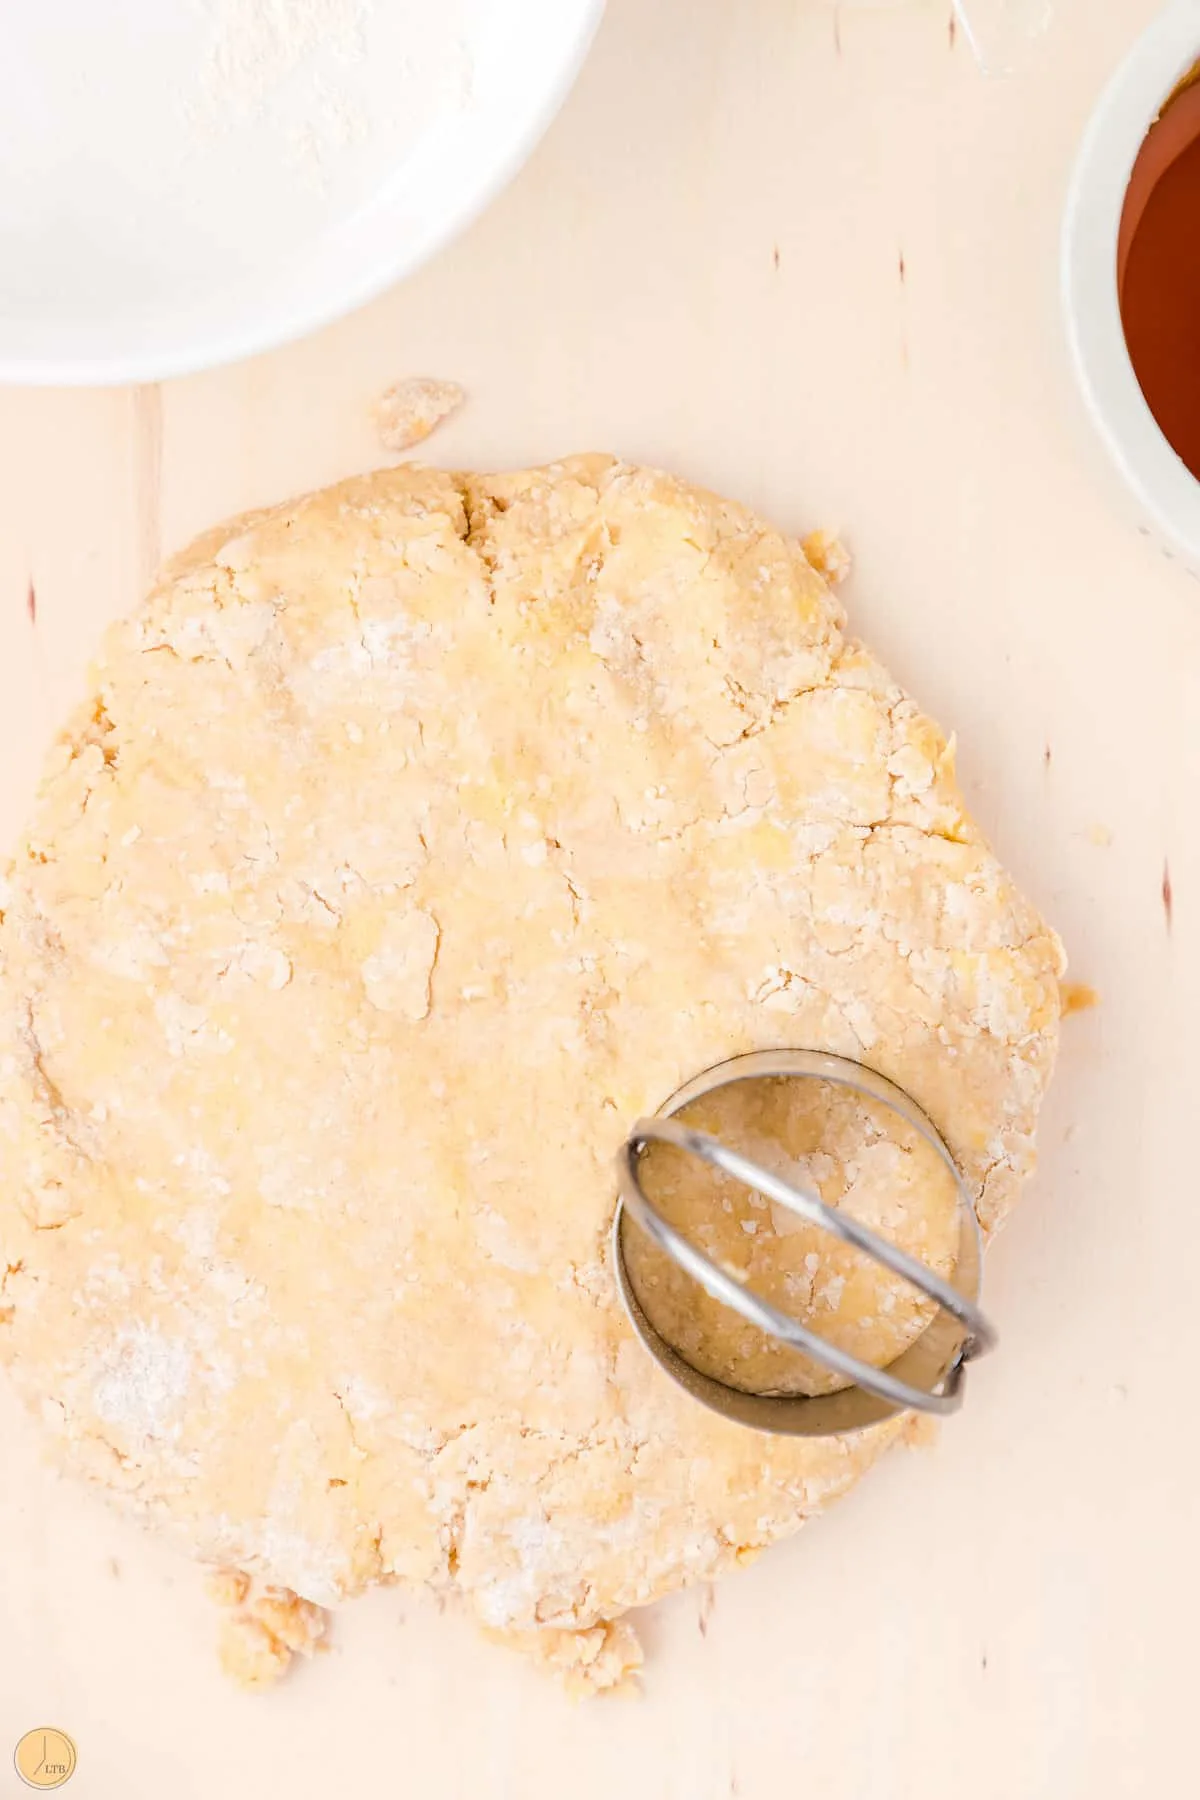 biscuit cutter cutting dough into circles